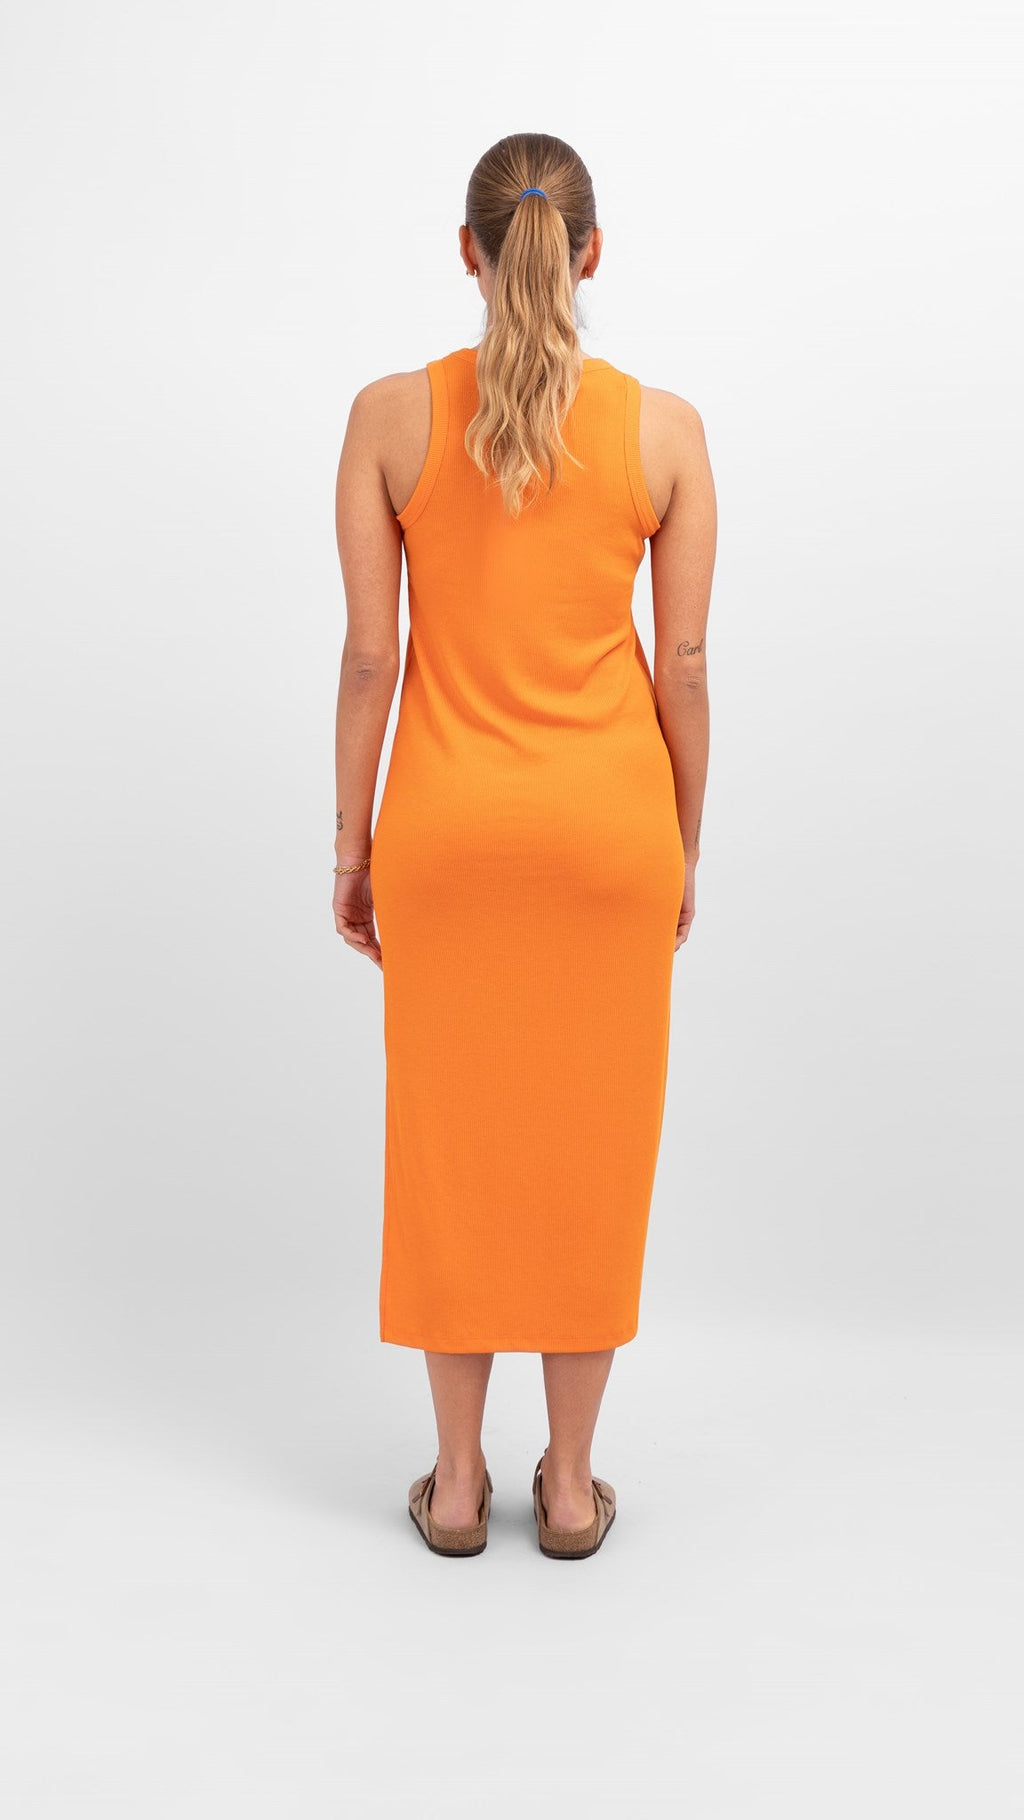 Line Summer Dress - Arance arancione